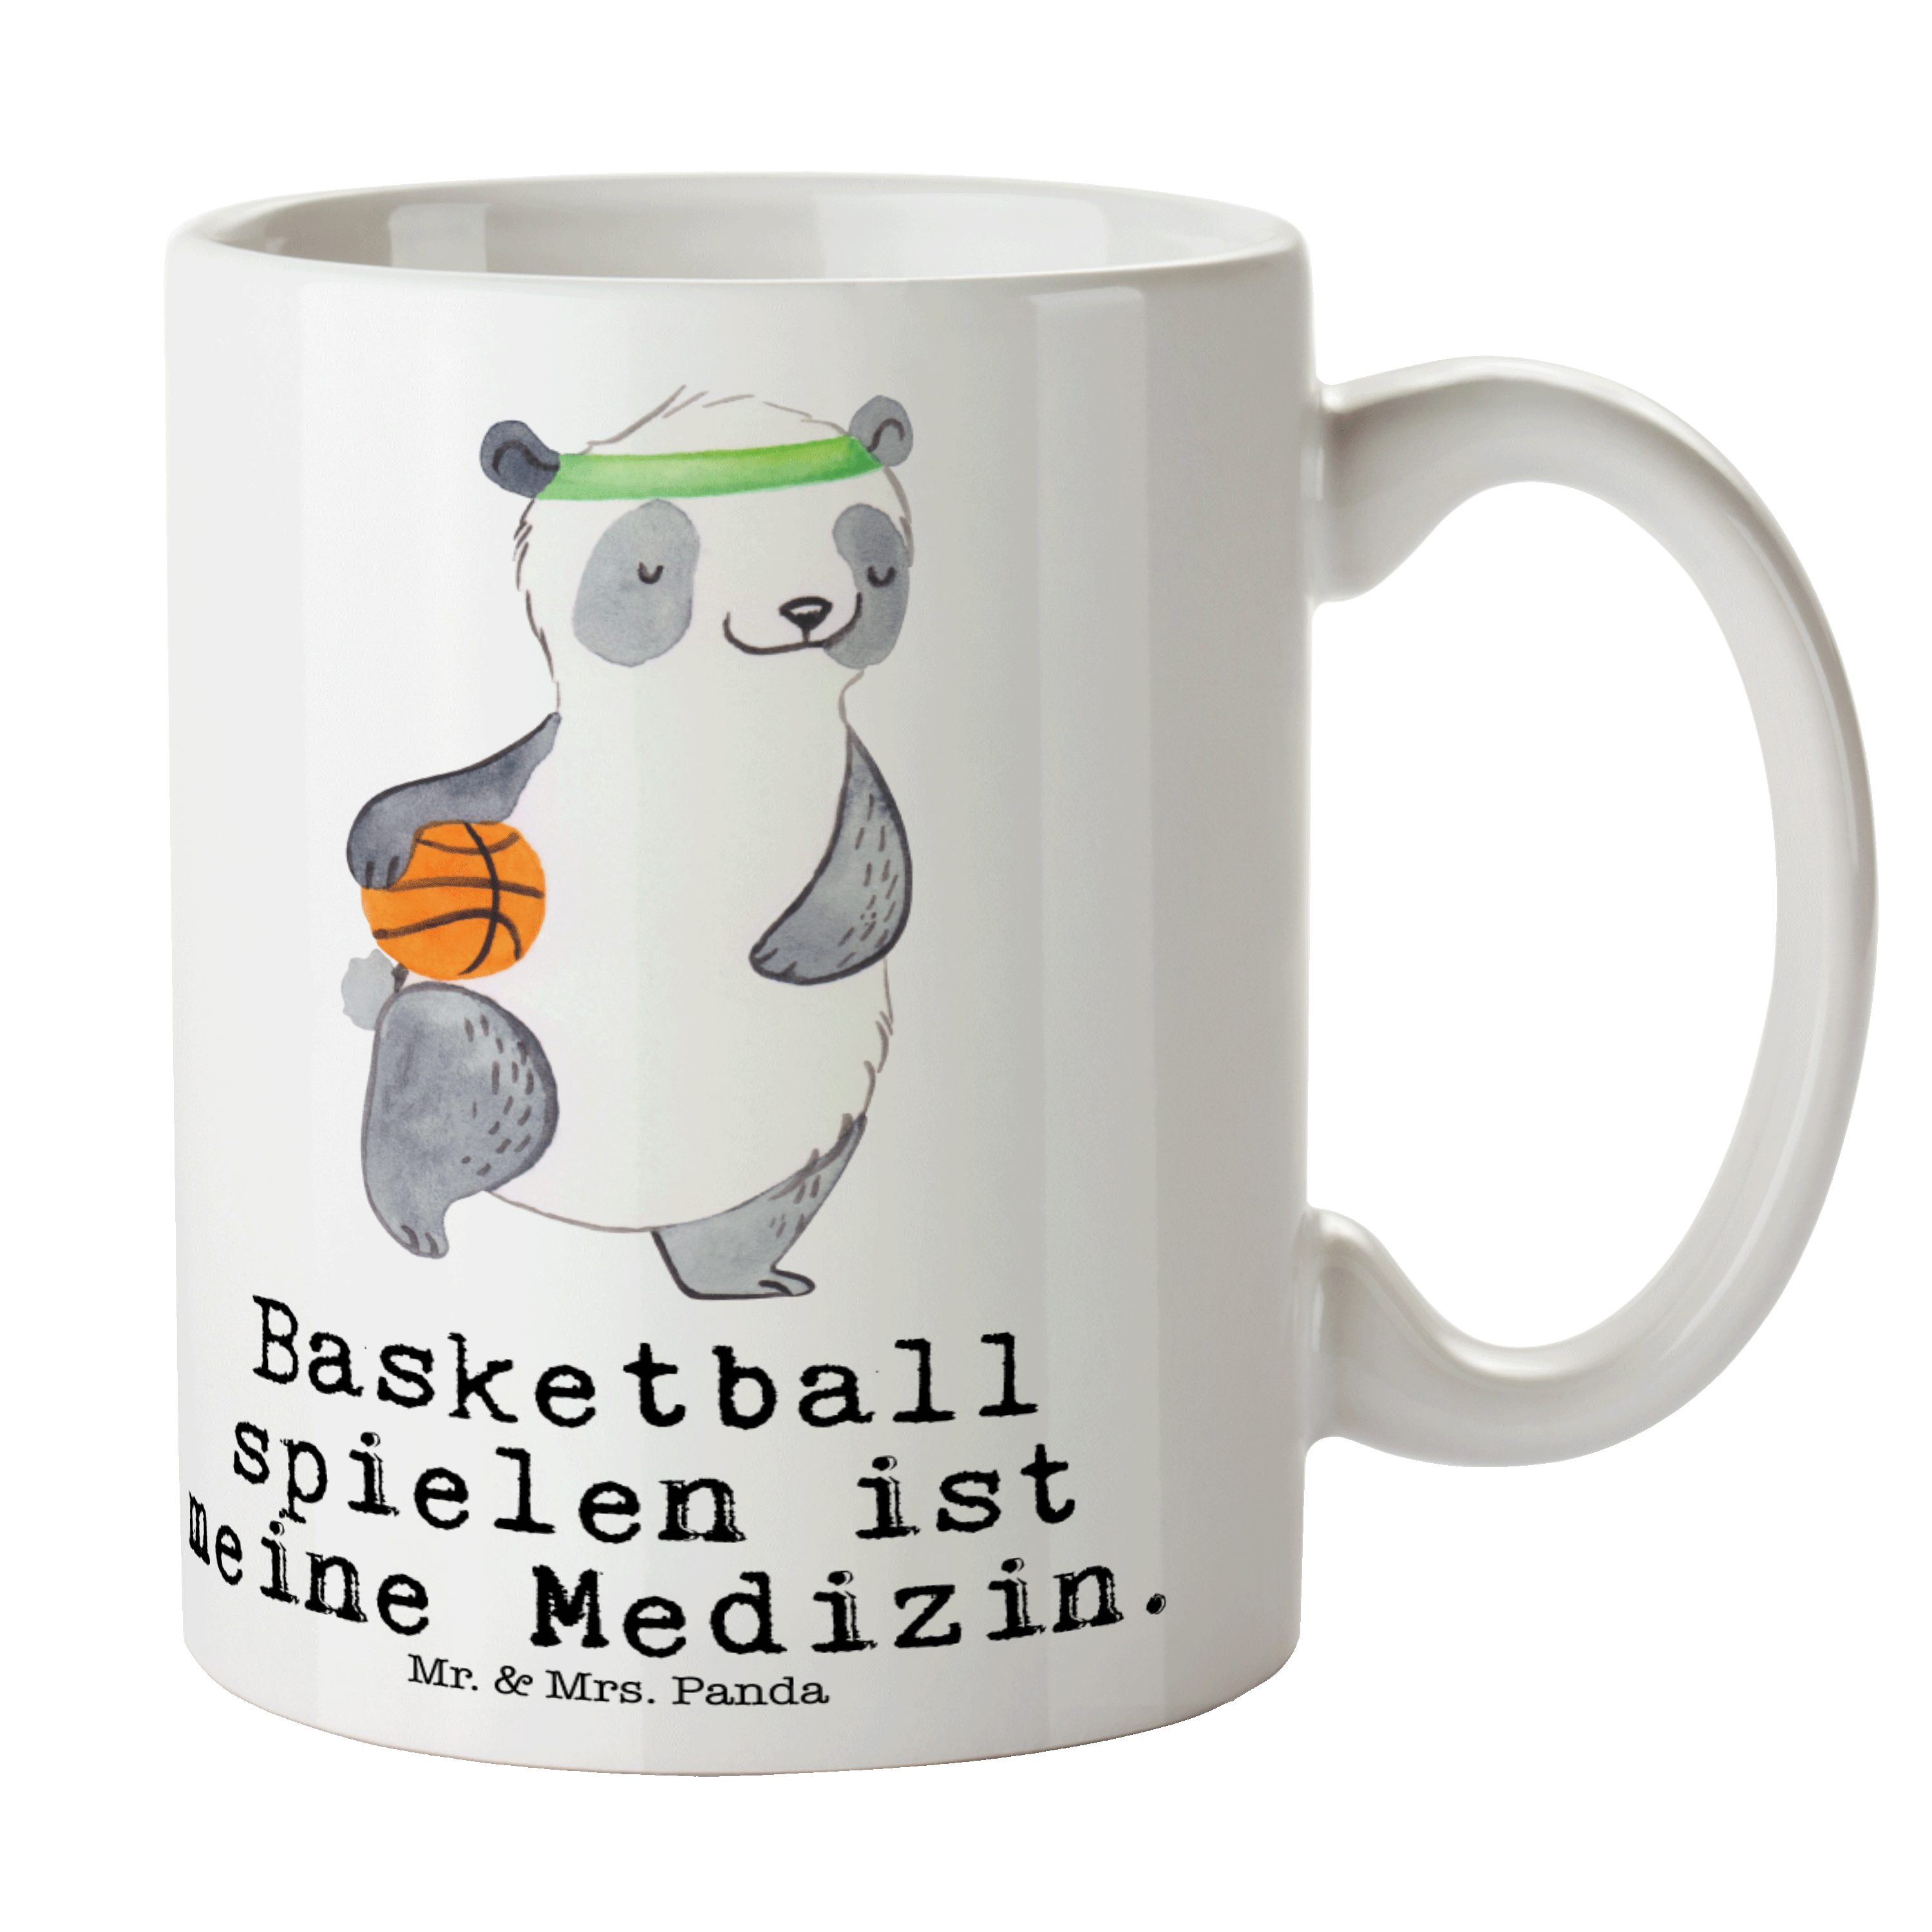 Mr. & Mrs. Panda Tasse Panda Basketball Medizin - Weiß - Geschenk, Gewinn, Teebecher, Schenk, Keramik